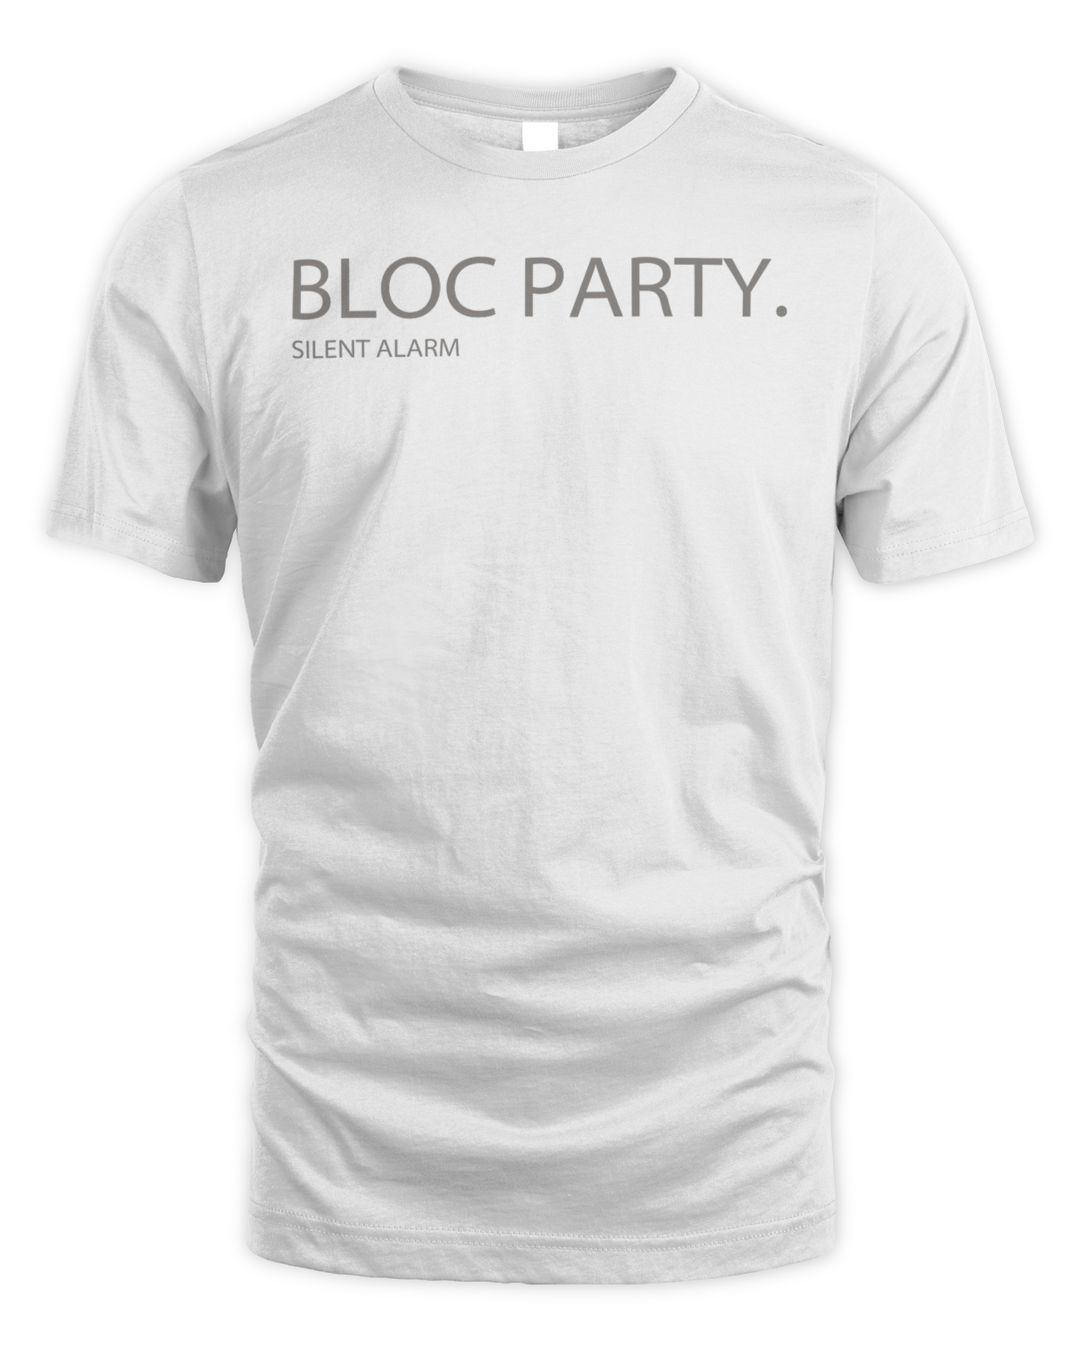 Bloc Party Silent Alarm Shirt